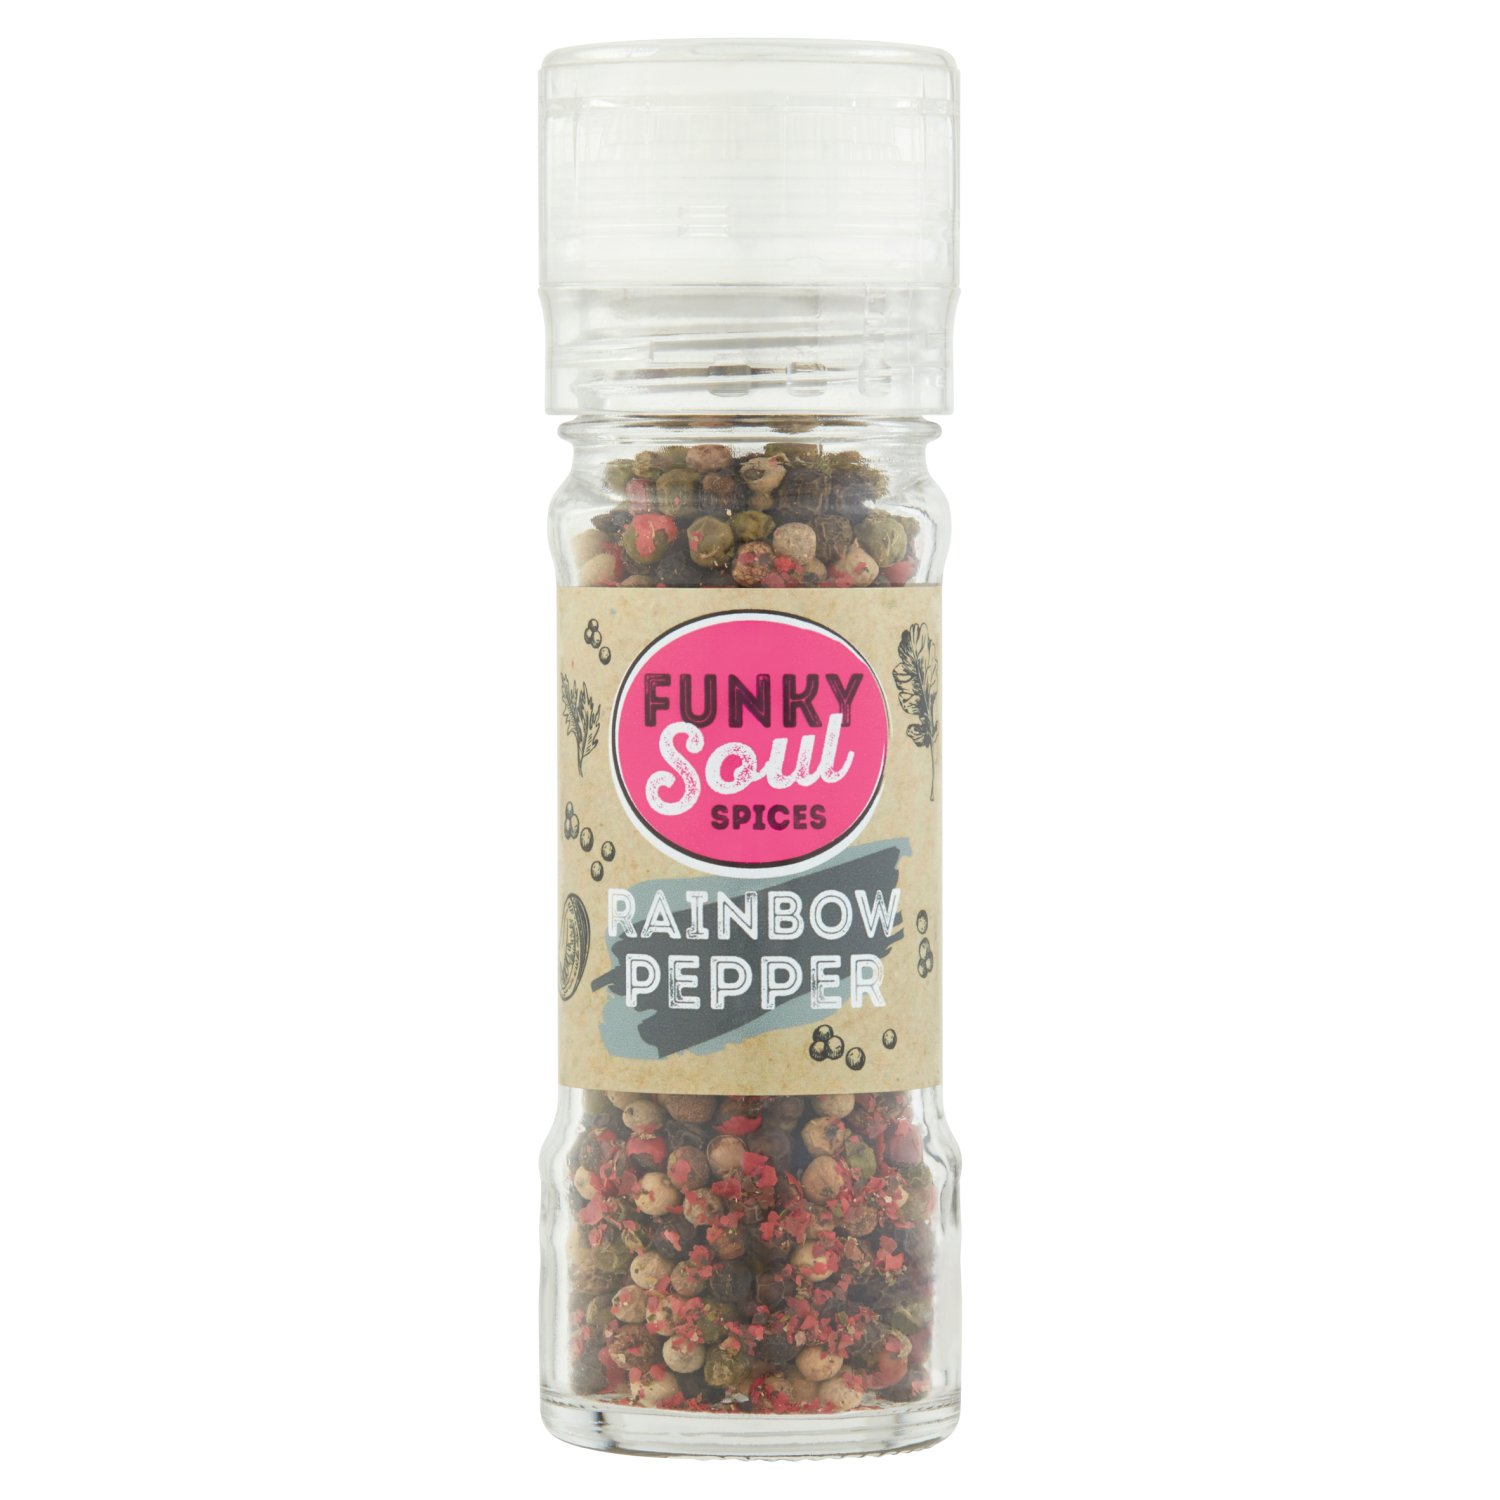 Funky Soul Rainbow Pepper Grinder (45 g)